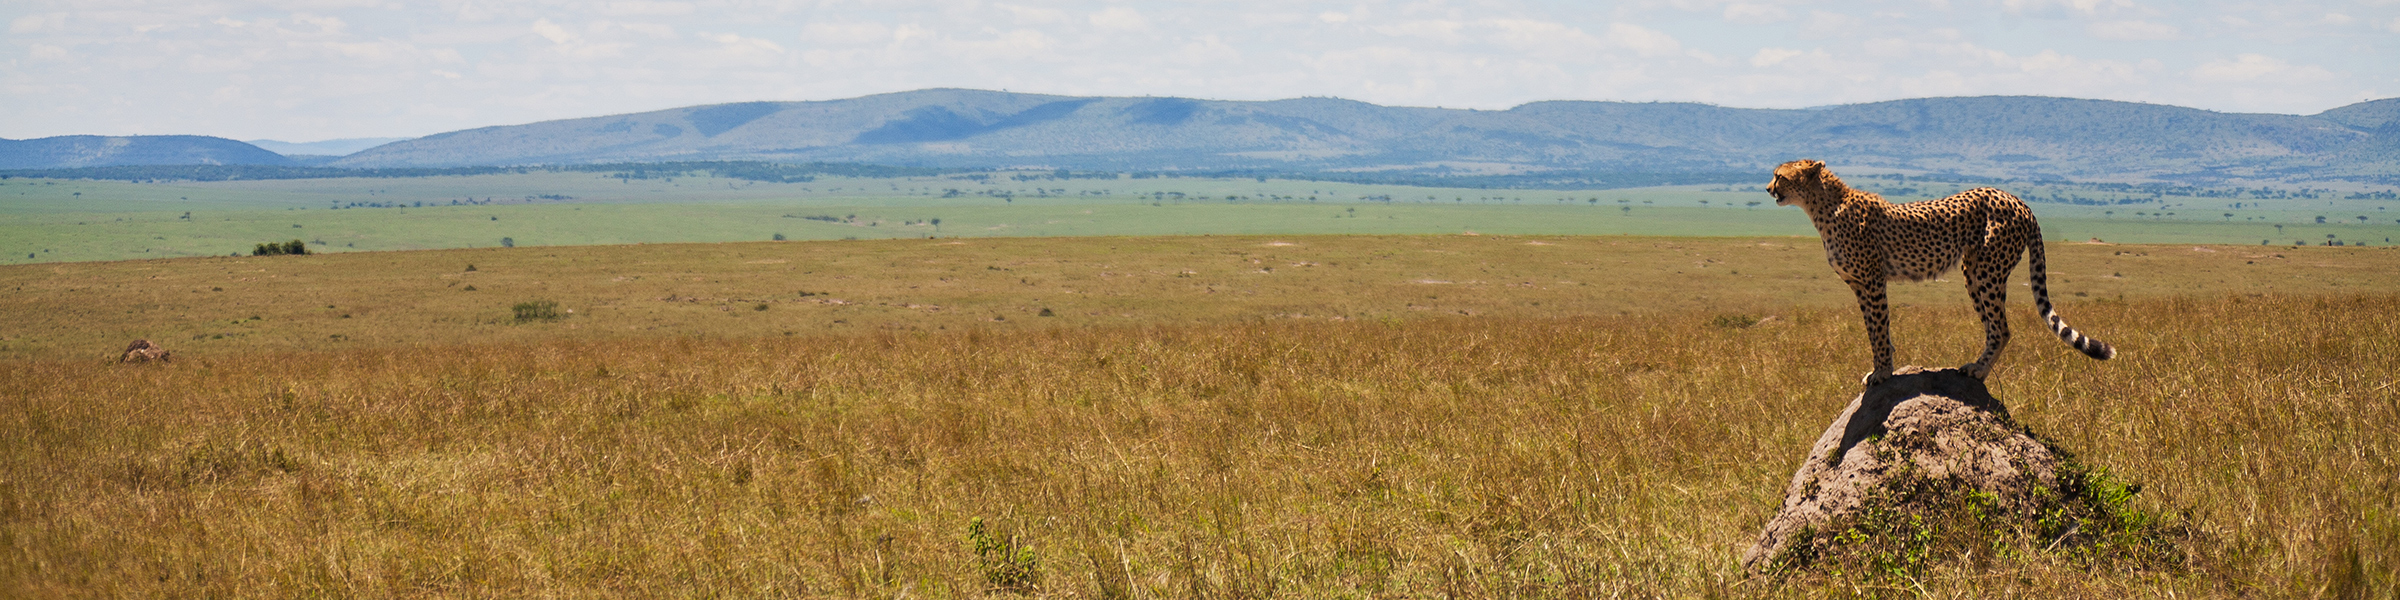 Kenya Maasai Mara National Reserve